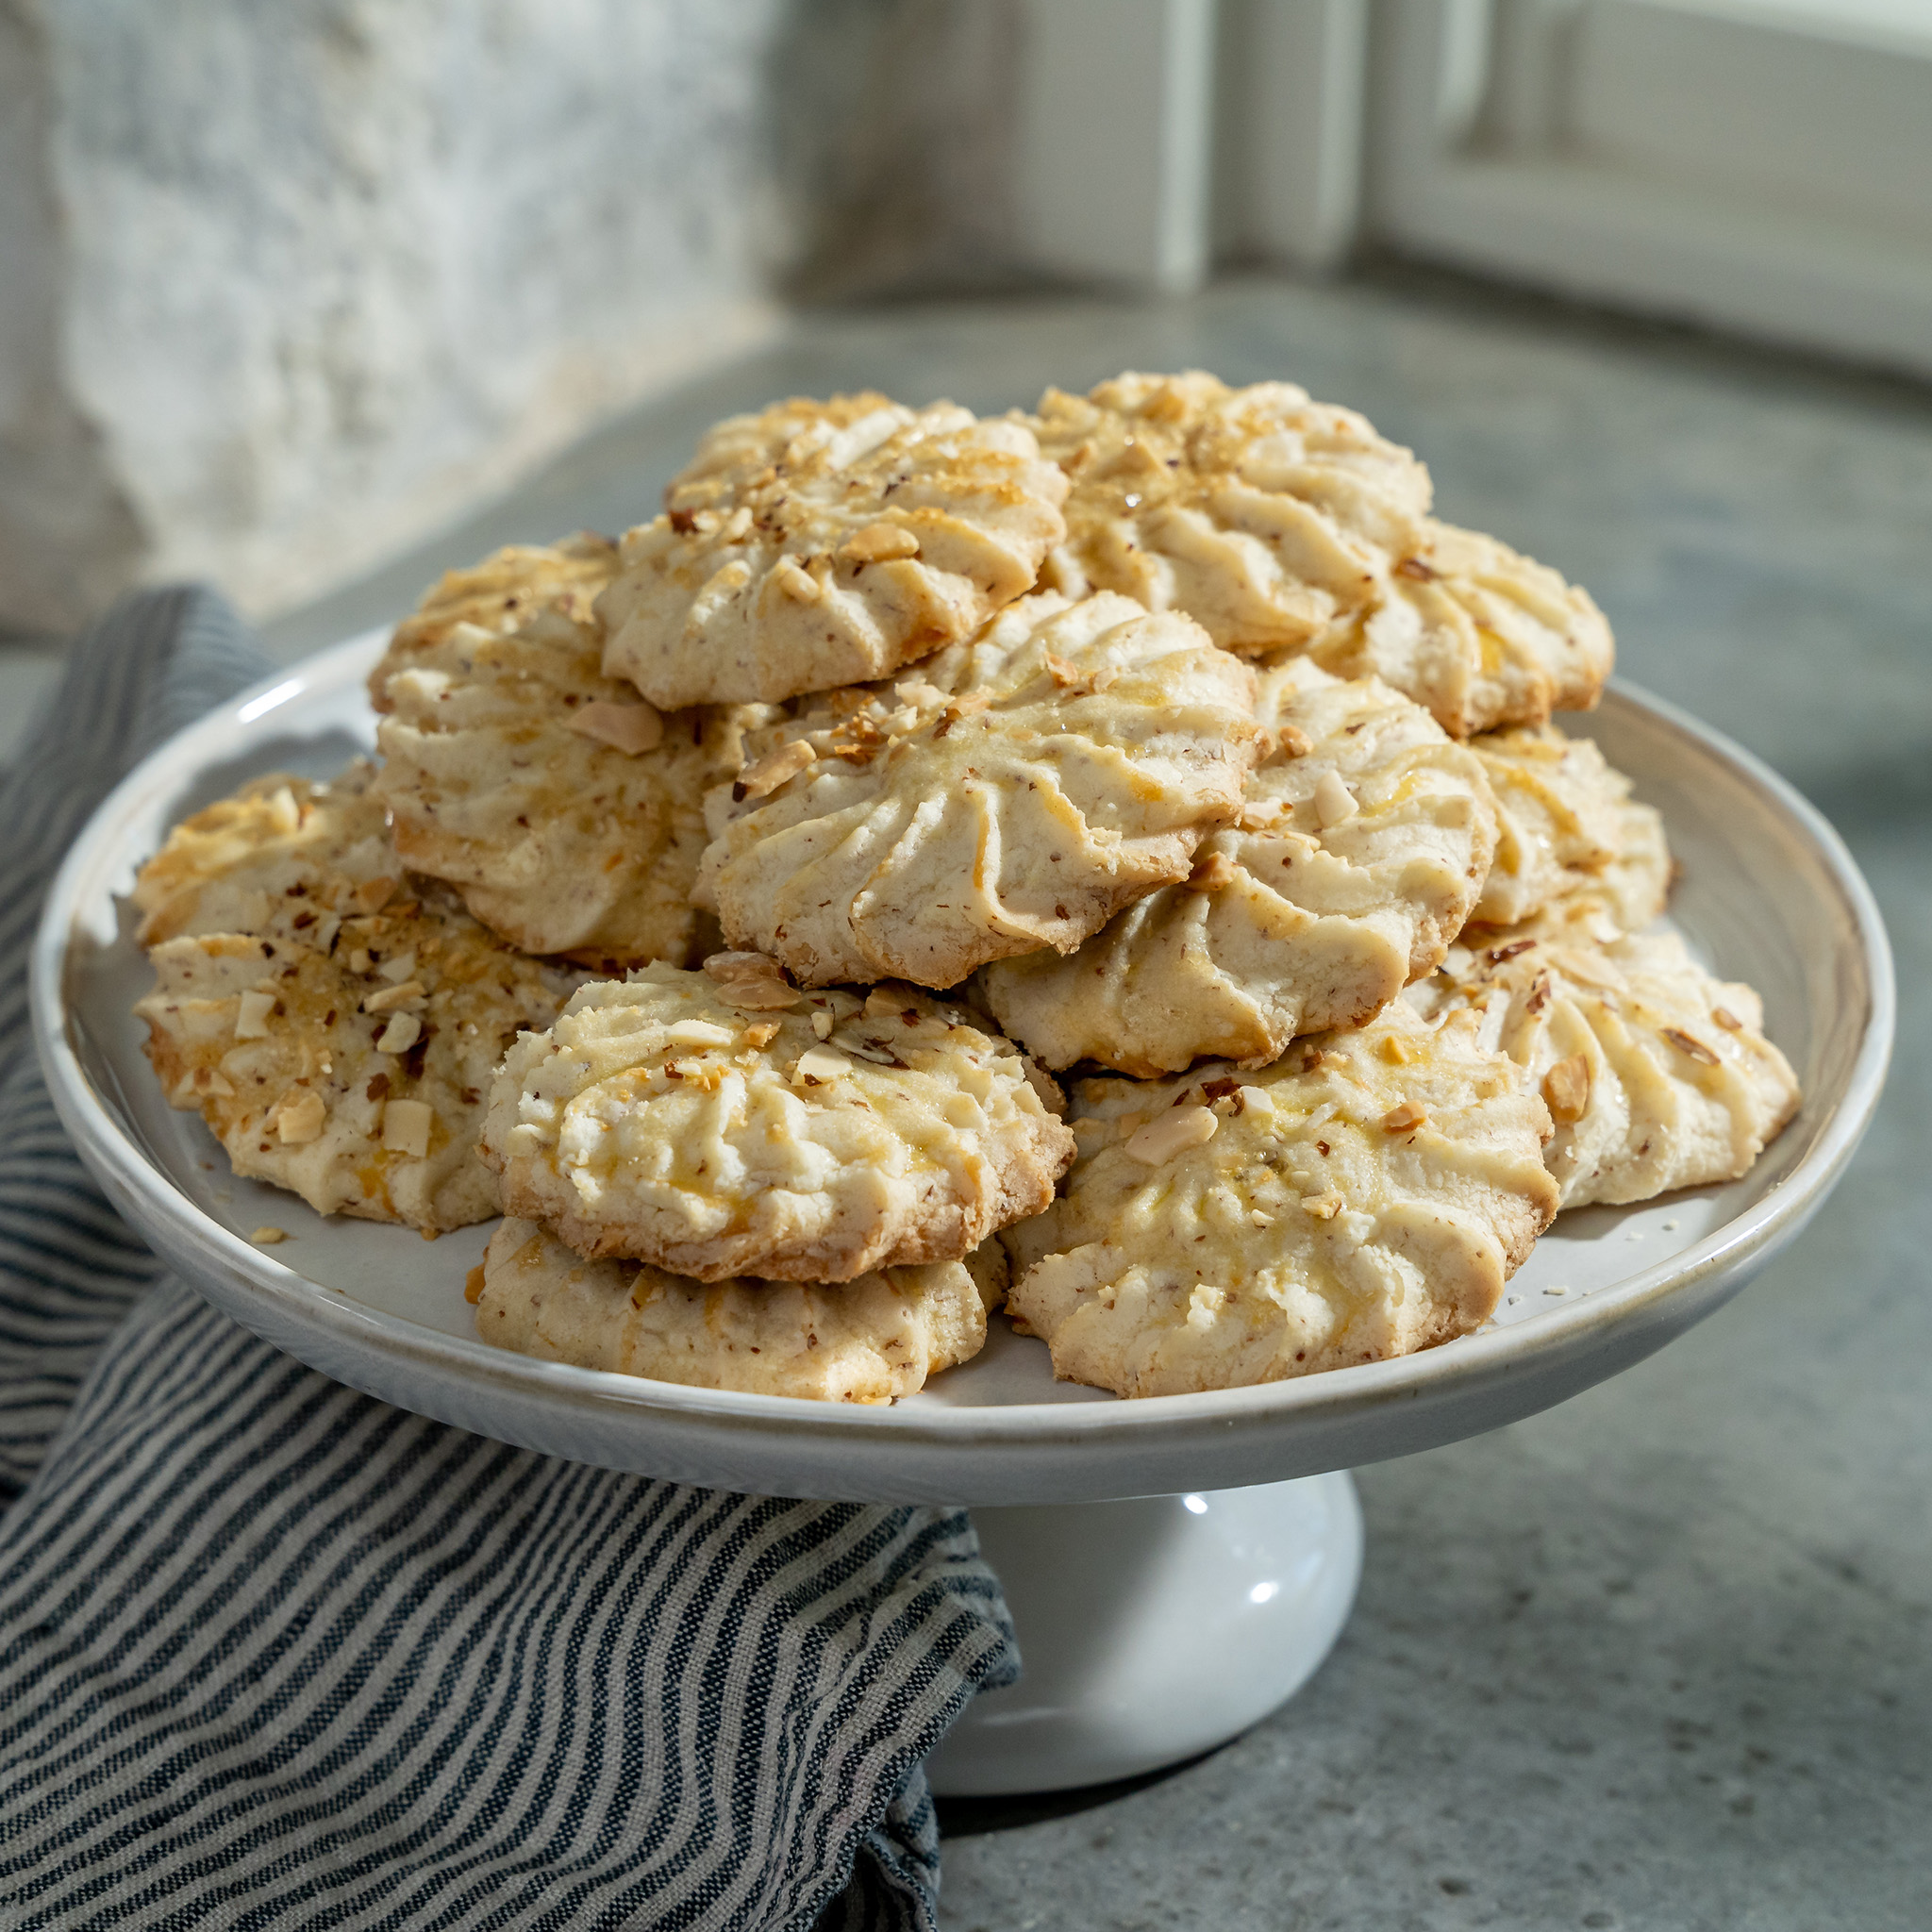 Joanna Gaines's Almond Cookies